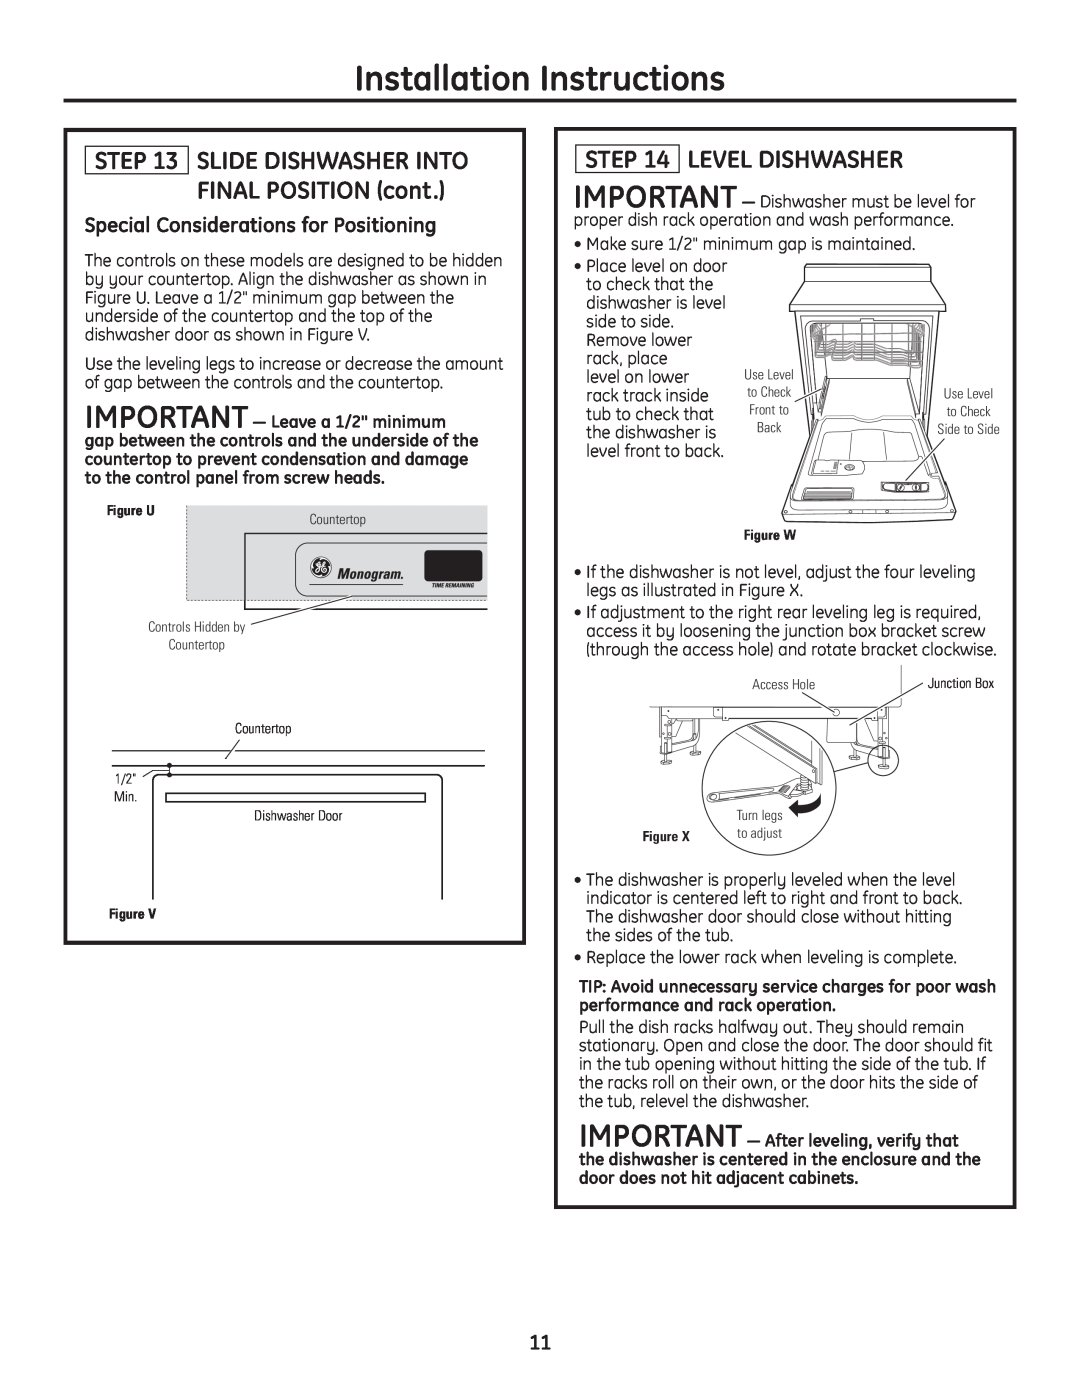 GE Monogram Built-In Dishwashers Level Dishwasher, SLIDE DISHWASHER INTO FINAL POSITION cont, Installation Instructions 